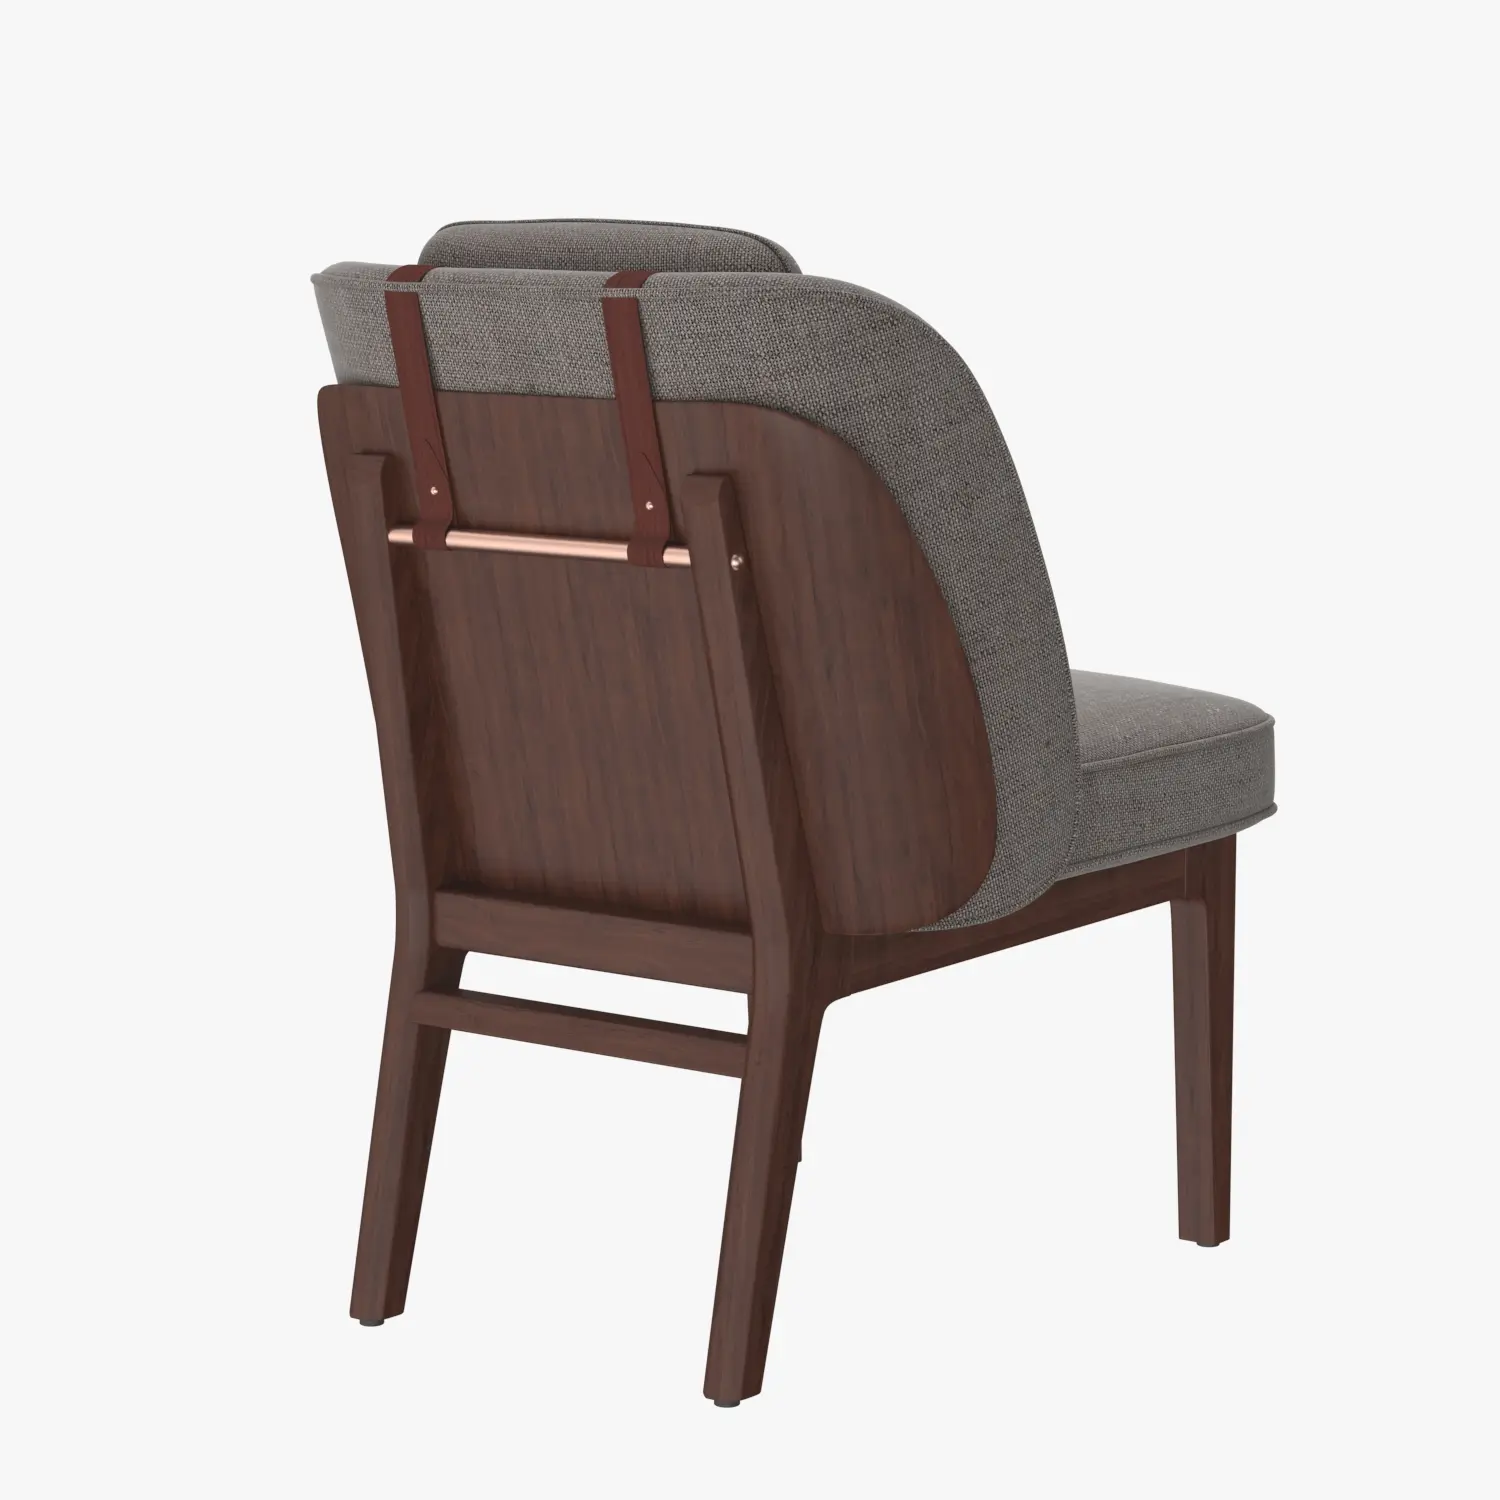 Brightliner Sloane Chair 3D Model_06